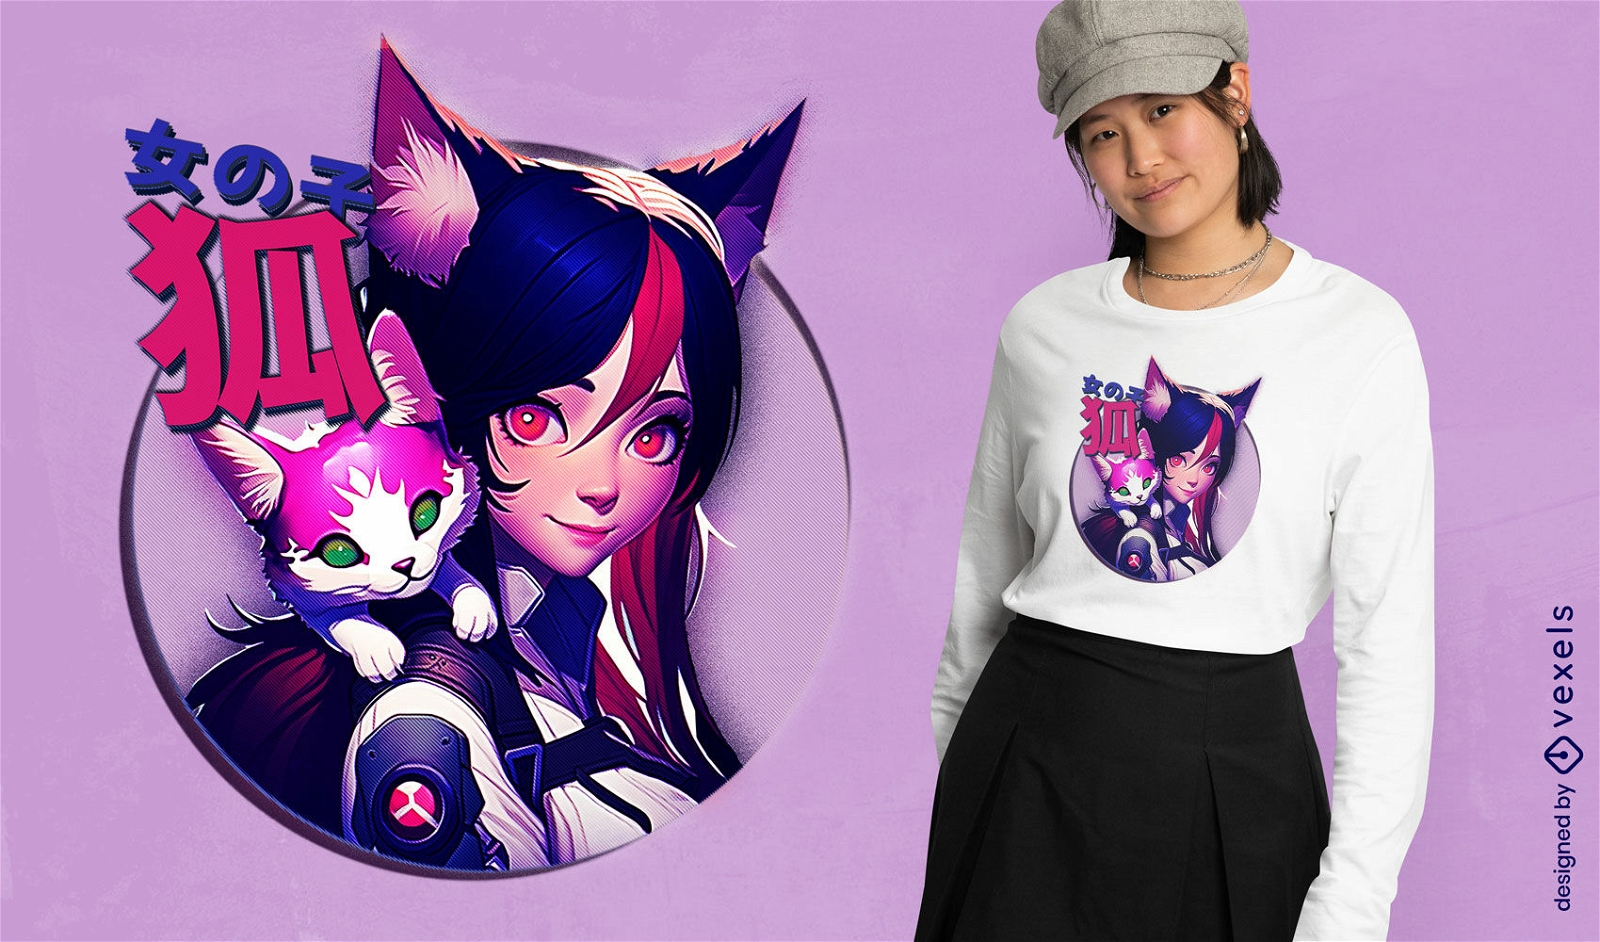 Anime girl with cat ears t-shirt psd